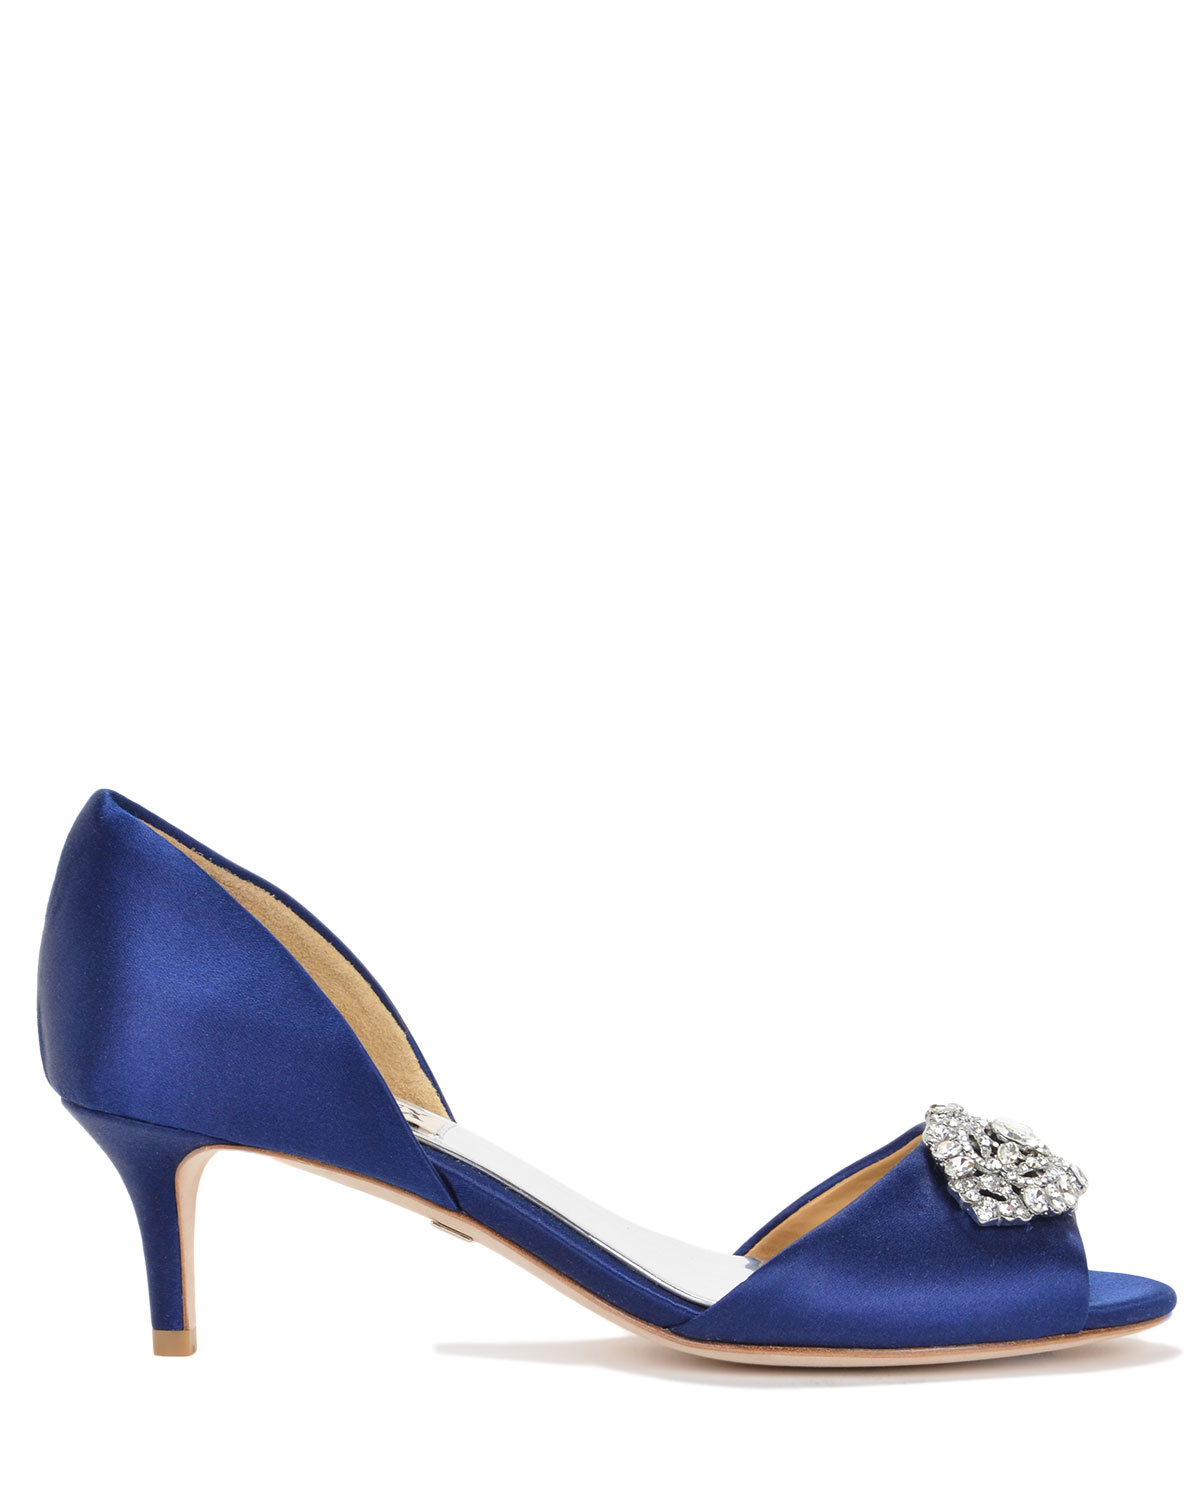 Badgley mischka Petrina D'orsay Decorated Evening Shoe in Blue | Lyst